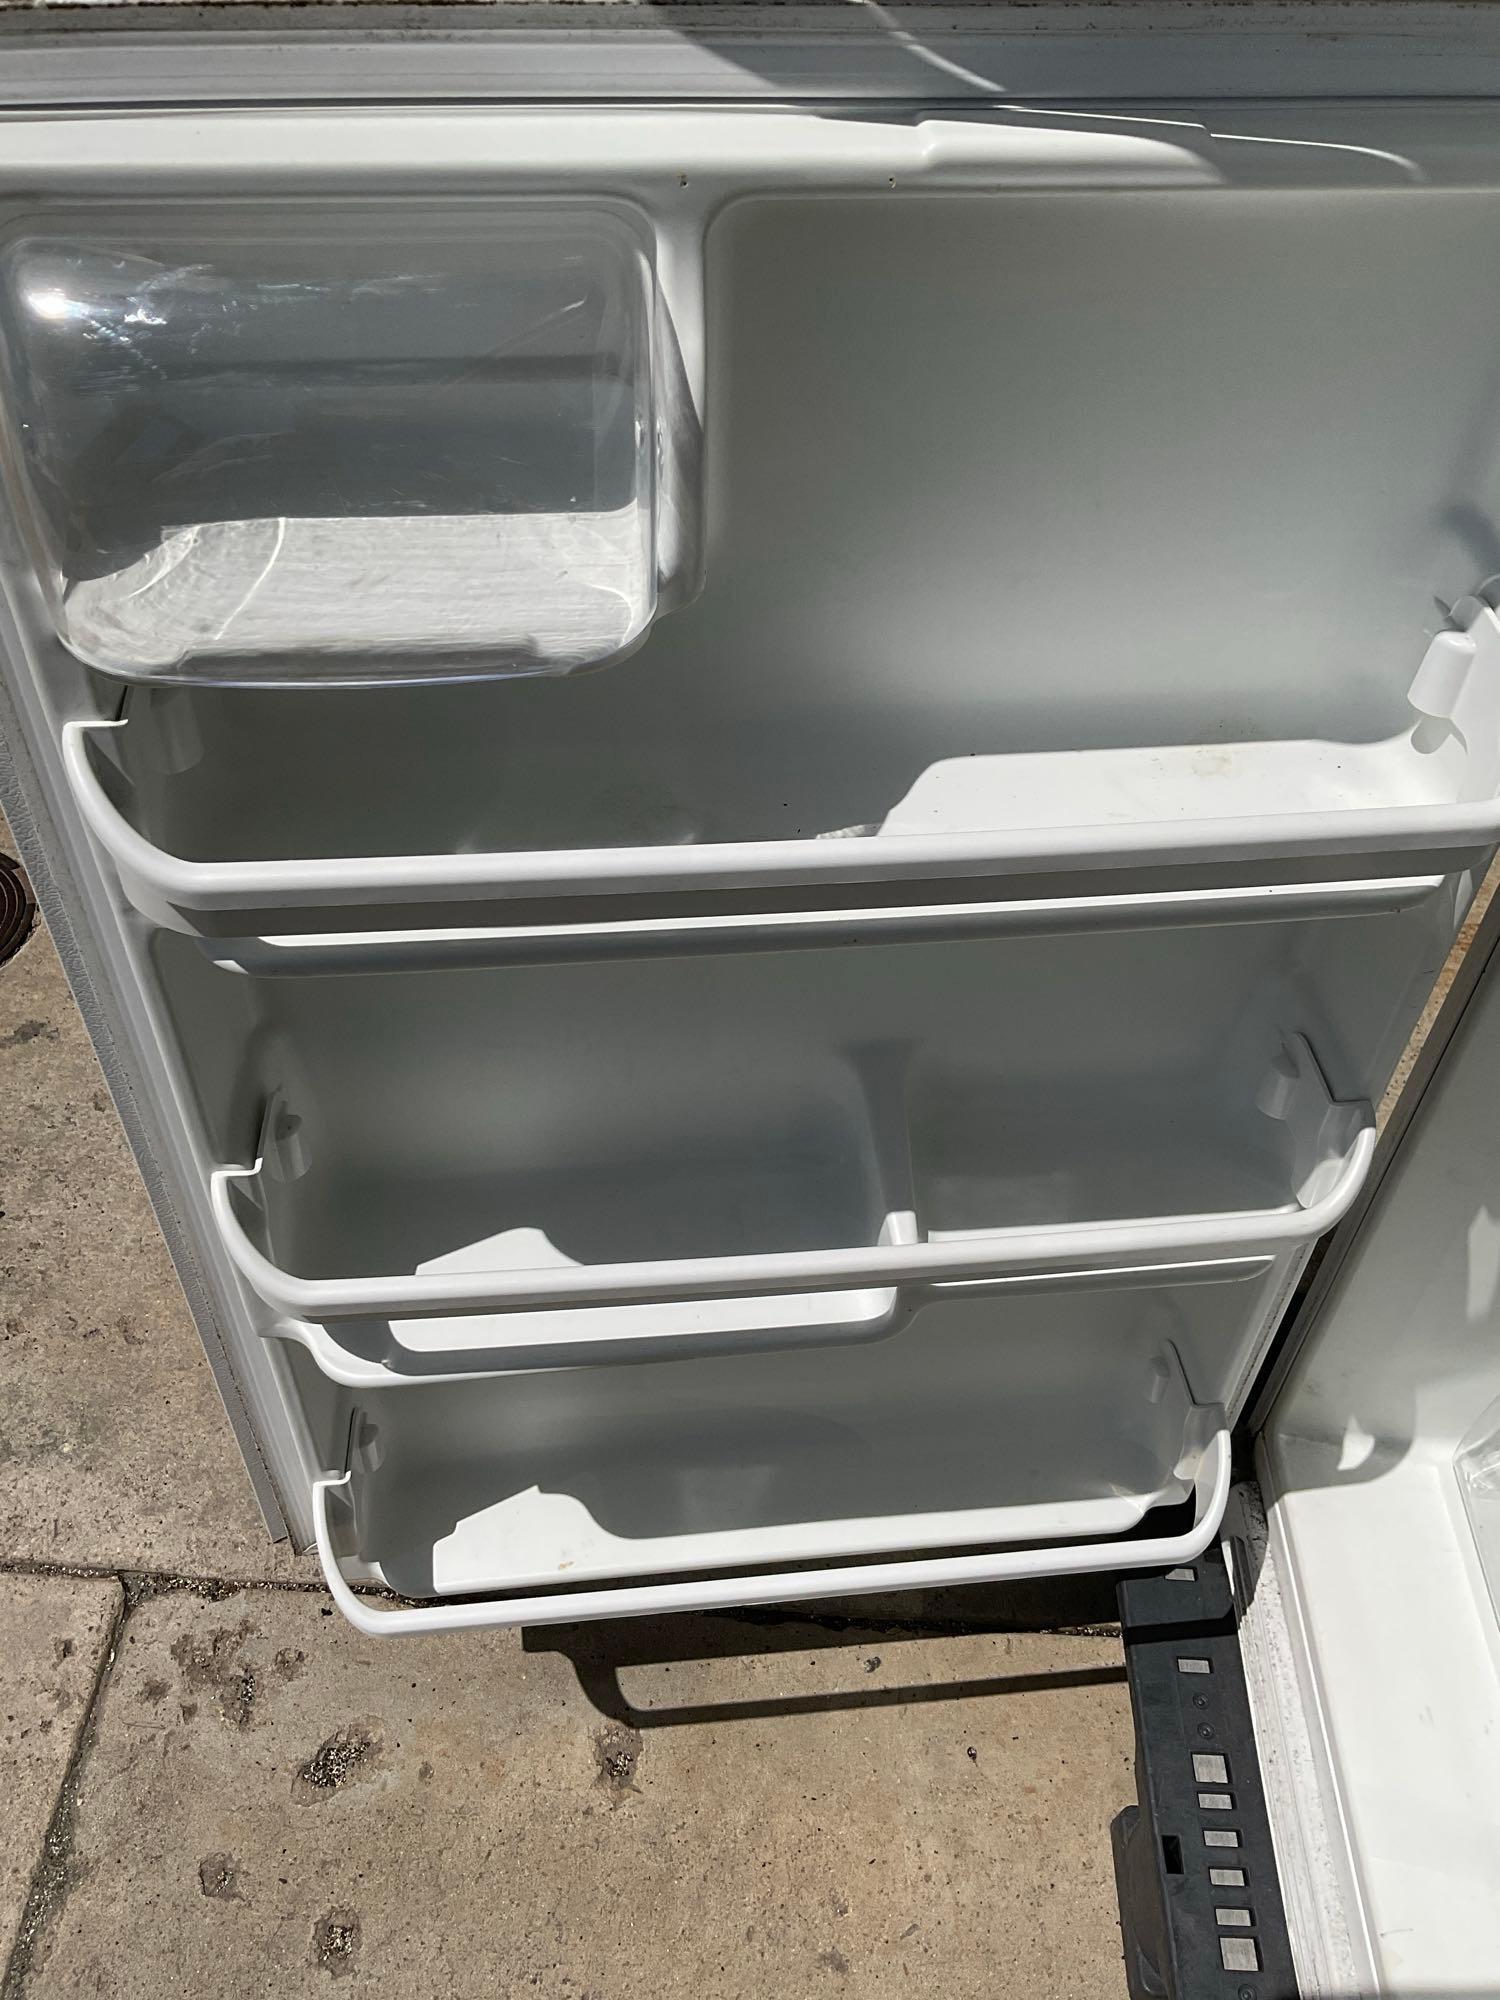 Kenmore refrigerator/ freezer. Works